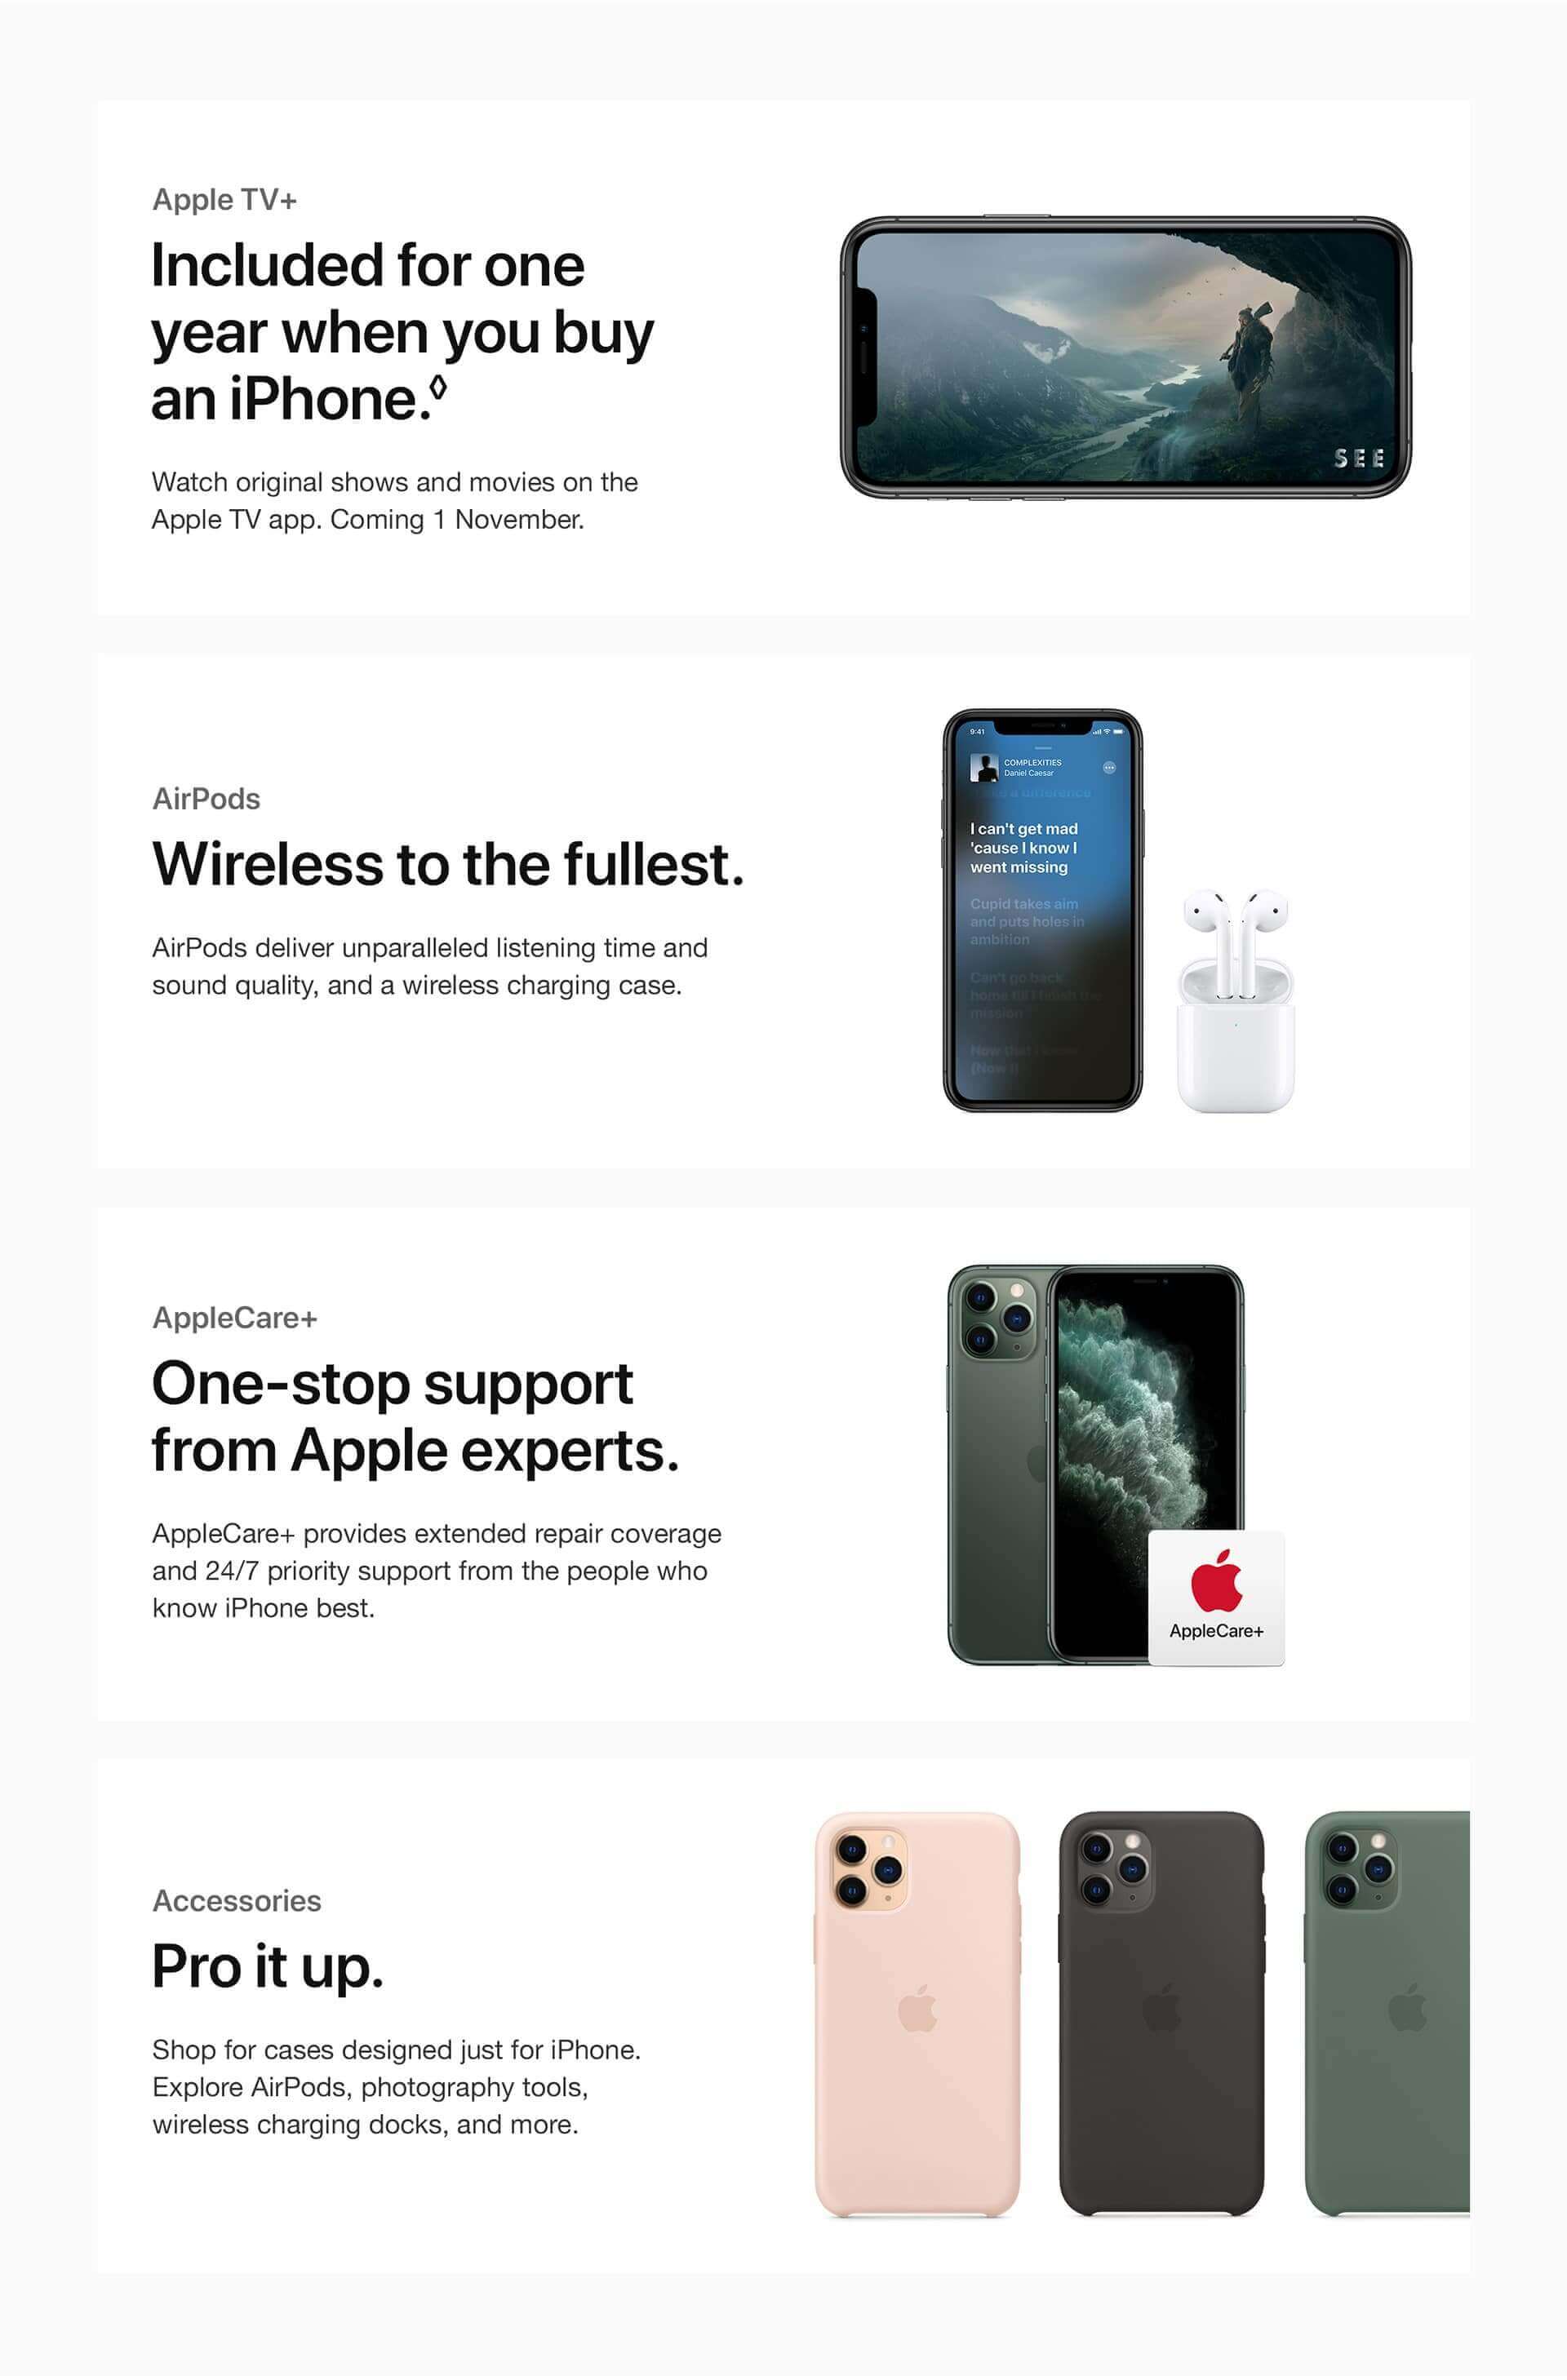 apple-iphone11-pro-max-price-etisalat-uae-overview-4